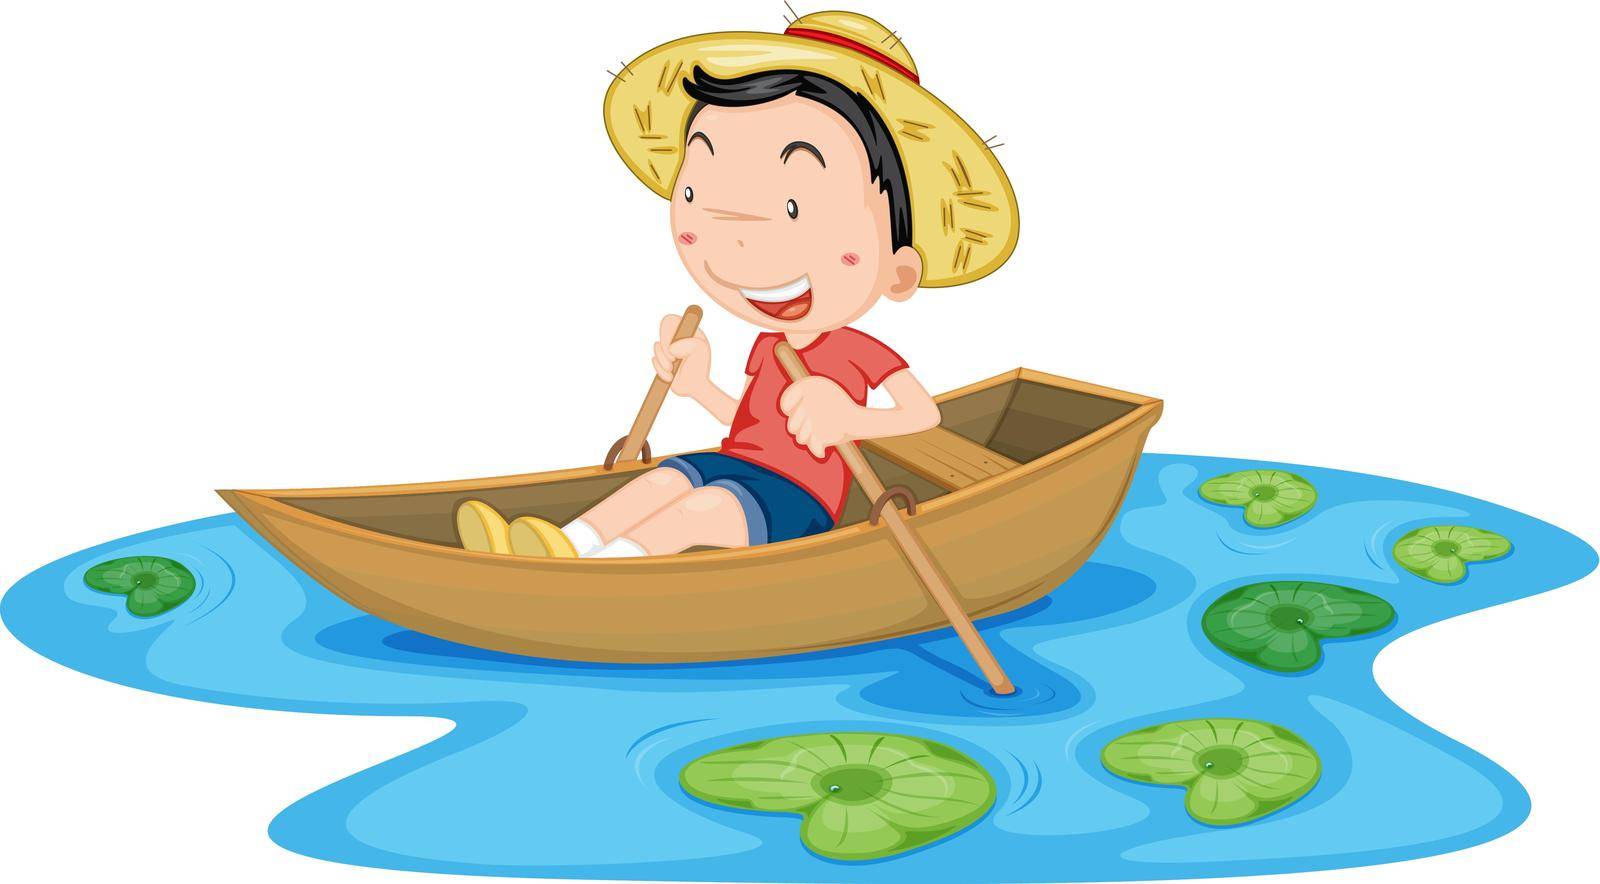 Illustration of boy in a boat